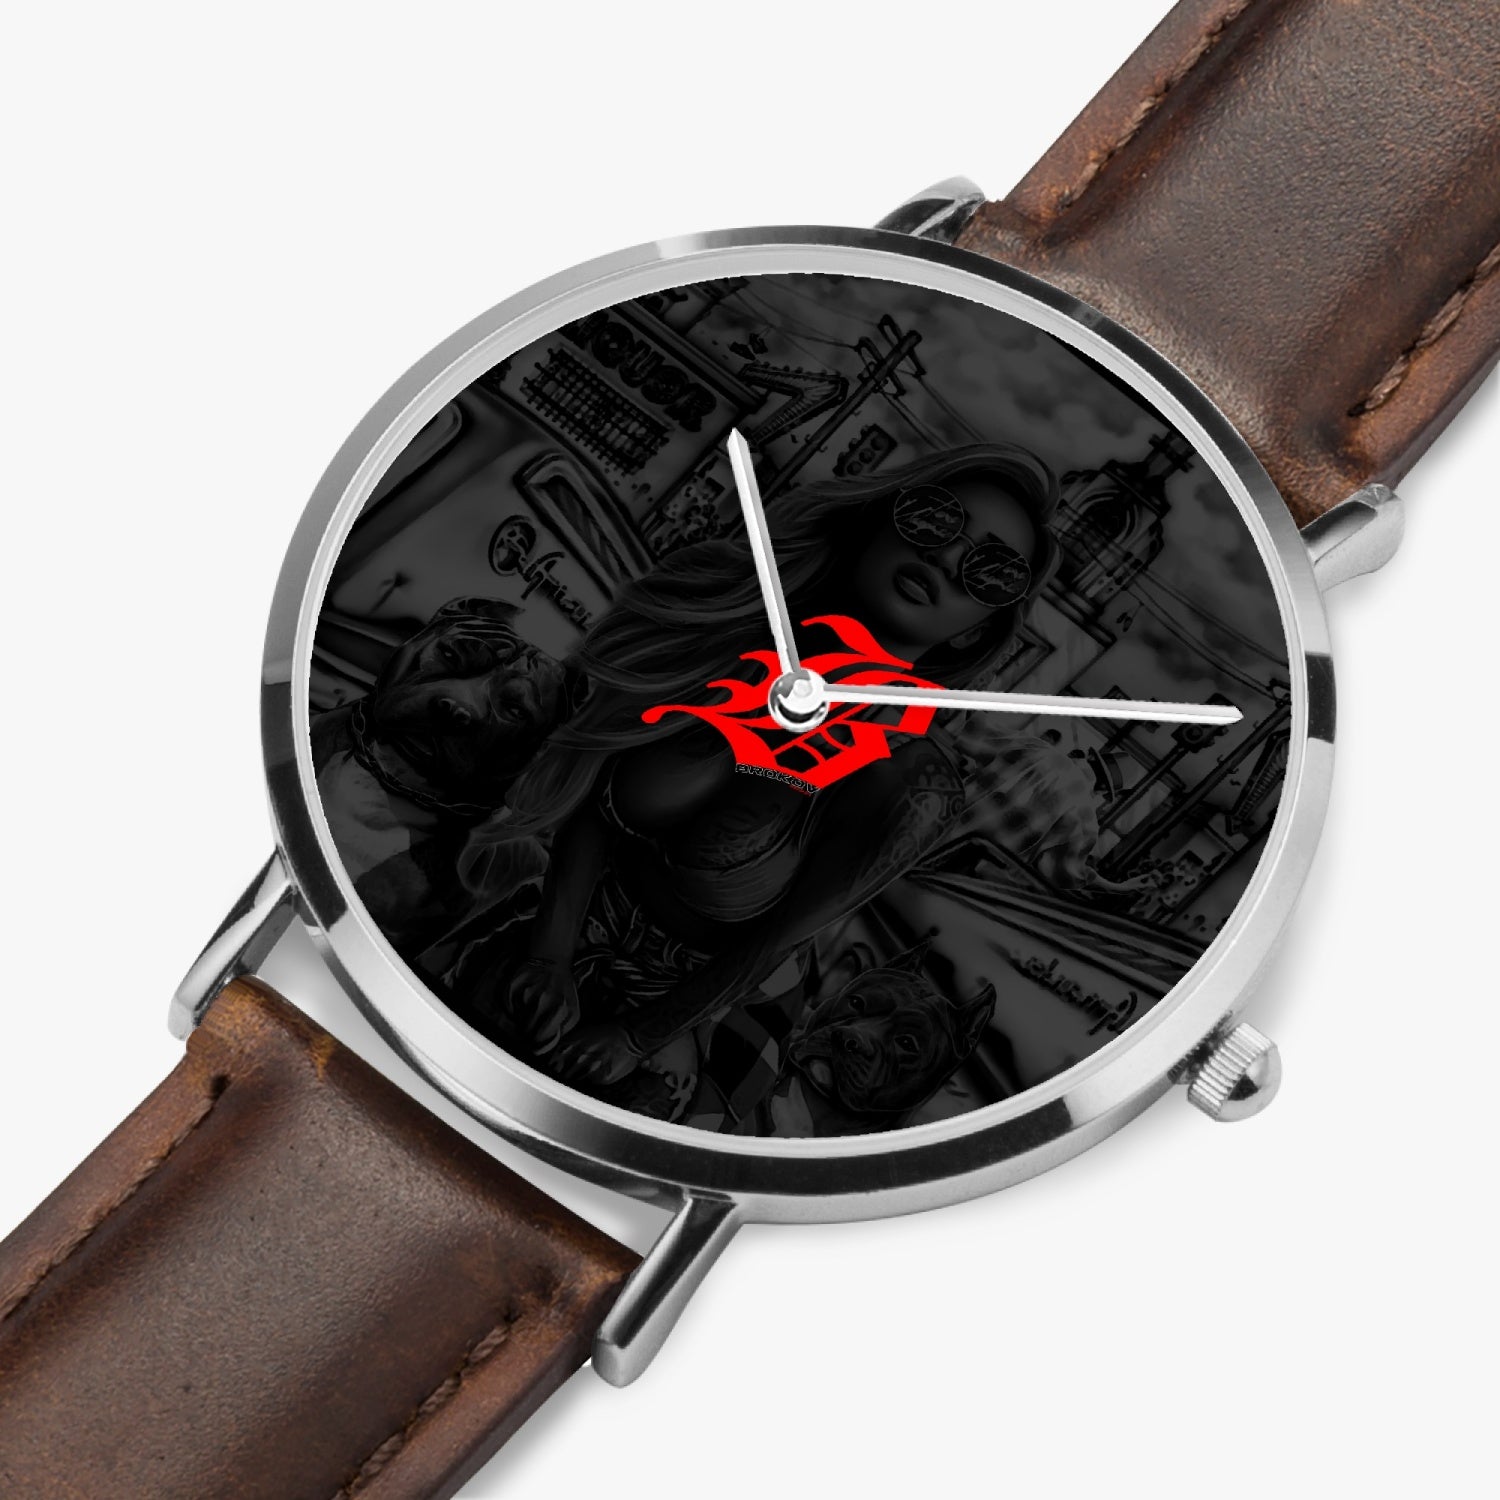 162. Hot Selling Ultra-Thin Leather Strap Quartz Watch (Silver) - GHETTO LOVE